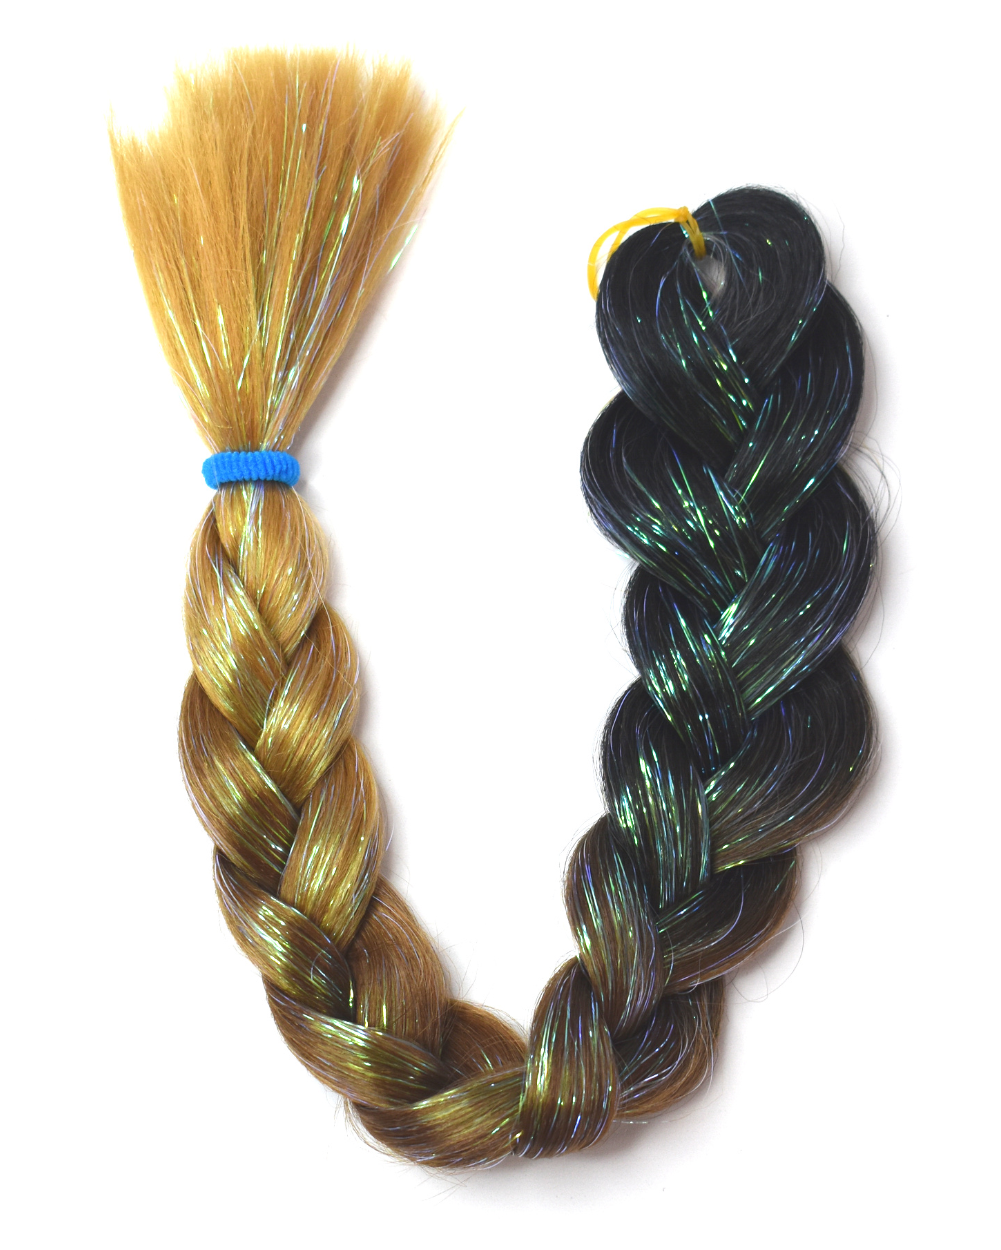 Bronde Mermaid - Ombré Hair Extension with Iridescent Tinsel - Lunautics Braid-In Hair